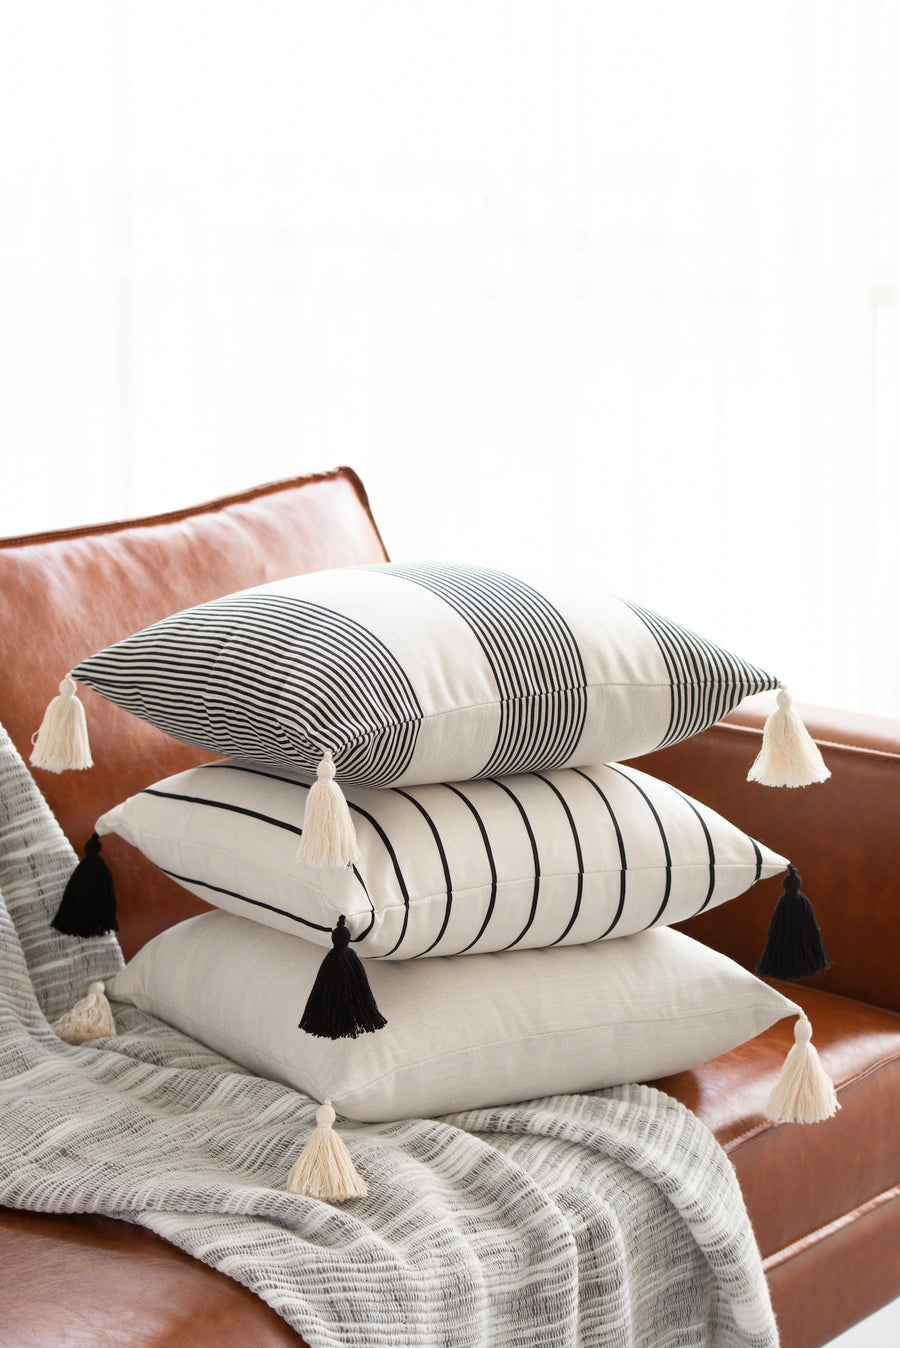 Moroccan Tassel Neutral Pillow Cover, Stripes, Black Beige, 18